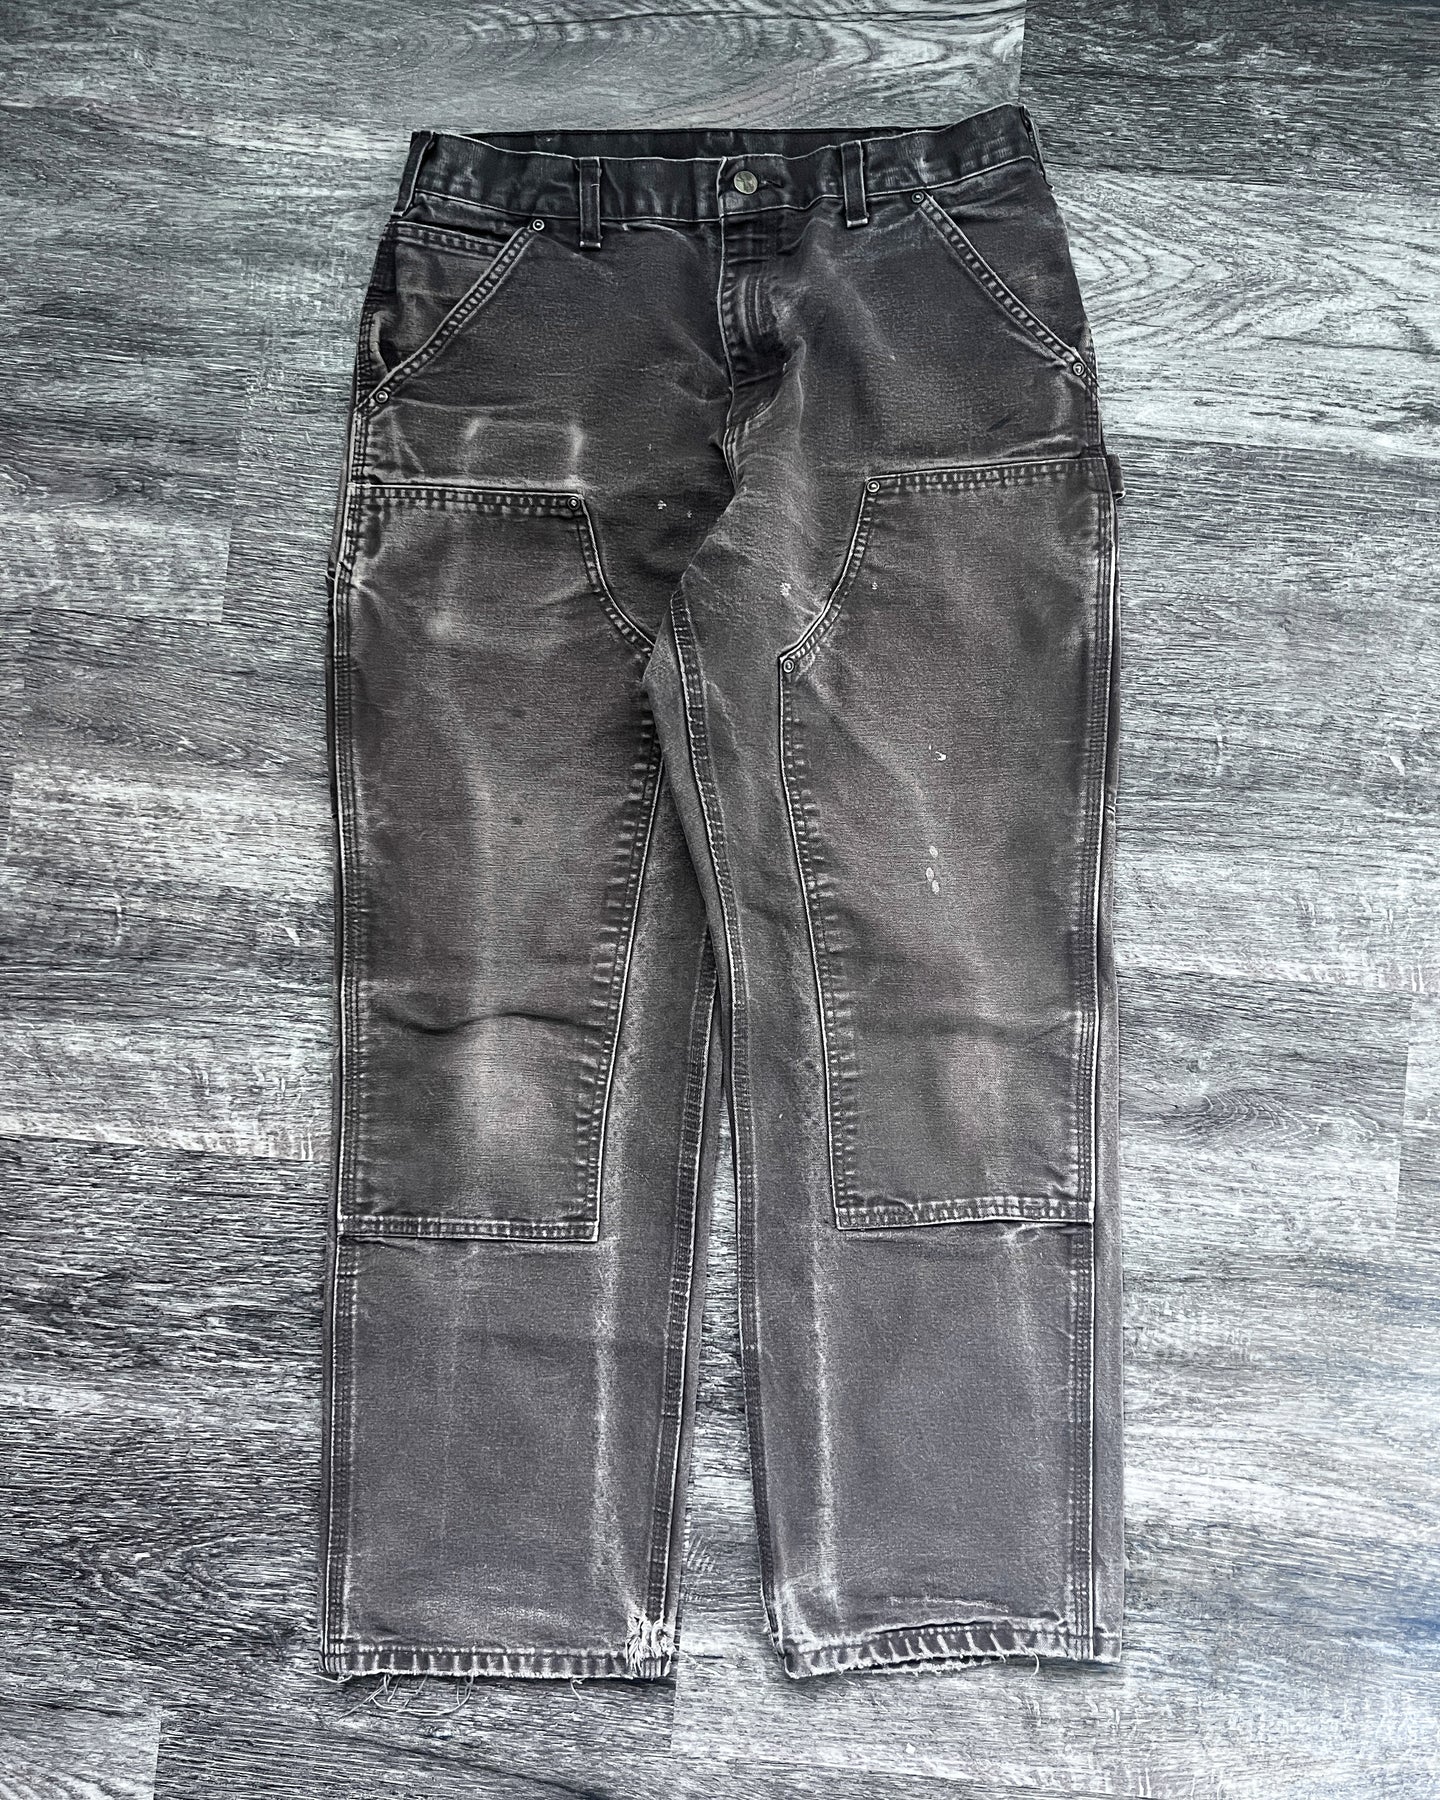 Carhartt Mud Brown Double Knee Carpenter Pants - Size 34 x 30